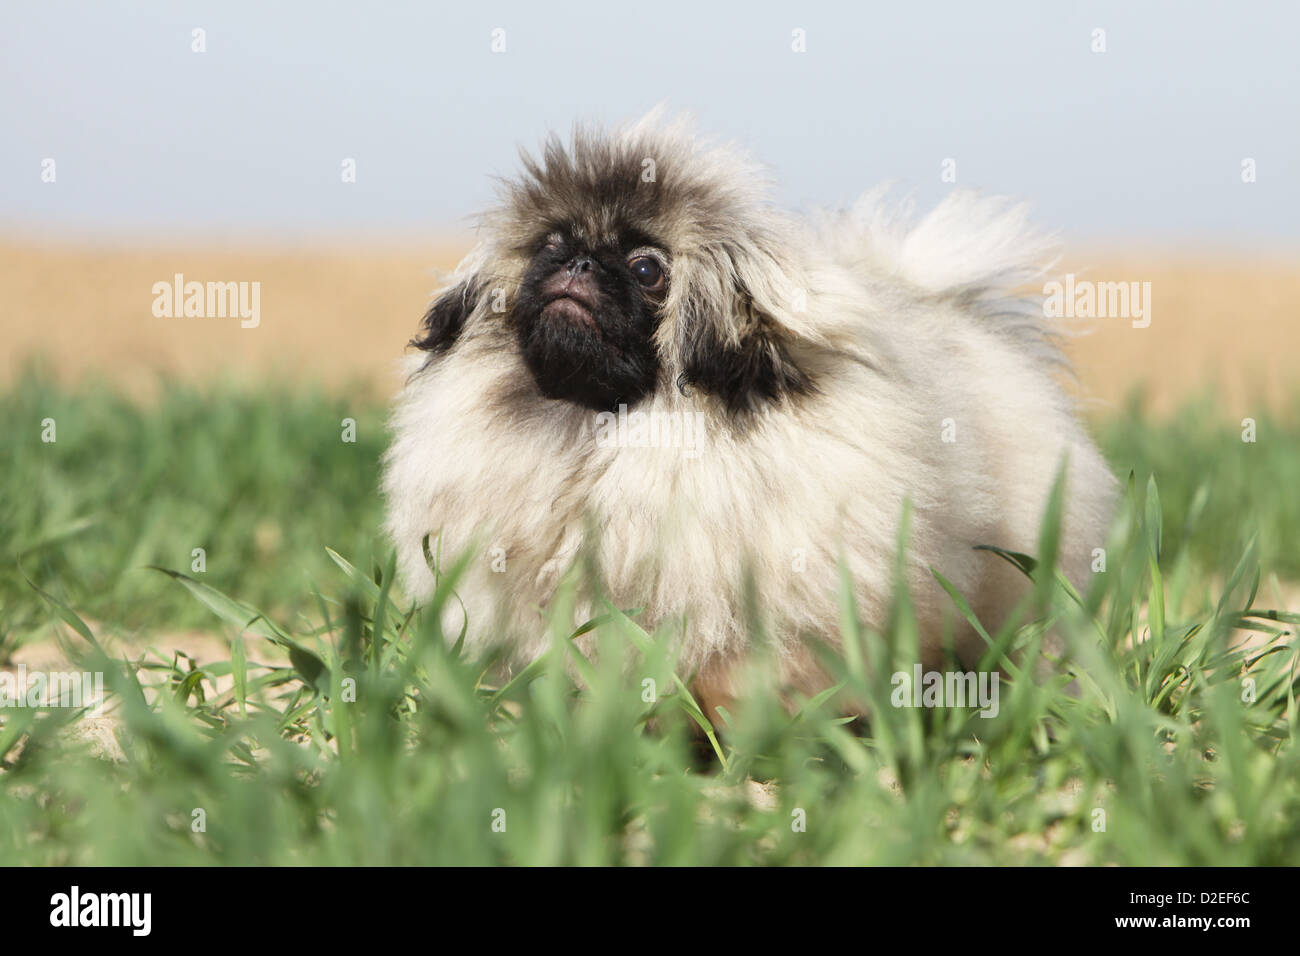 Dog Pekingese / Pekinese / Pékinois puppy standing in the grass Stock Photo